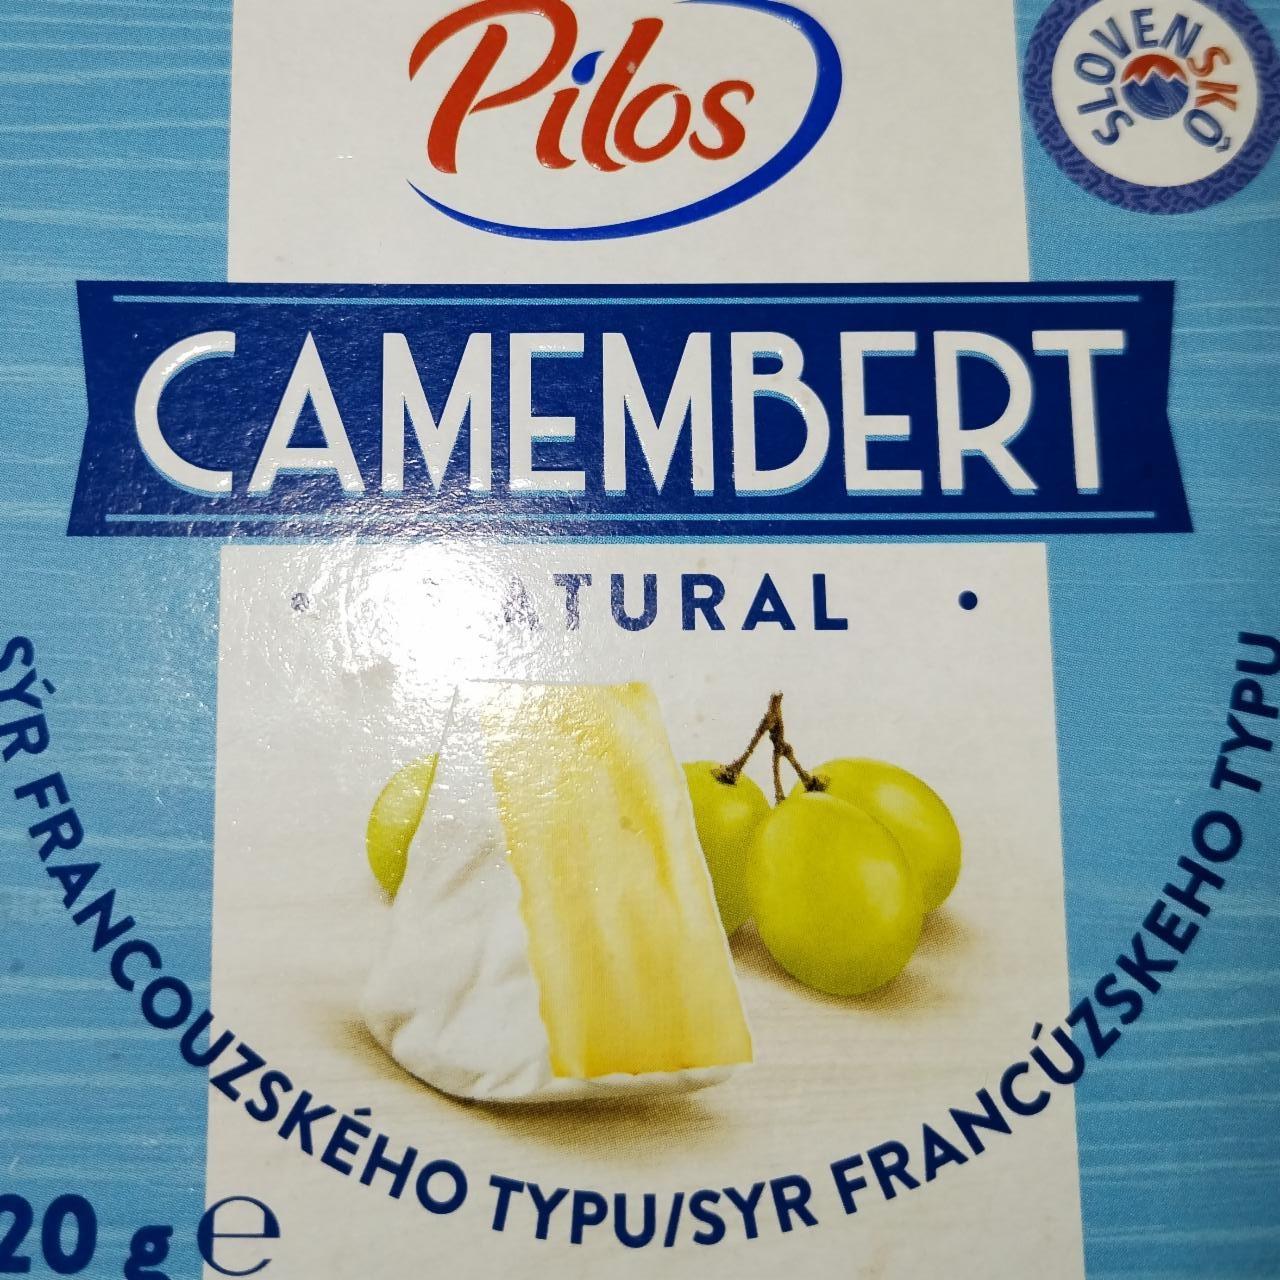 Képek - Camembert natural Pilos